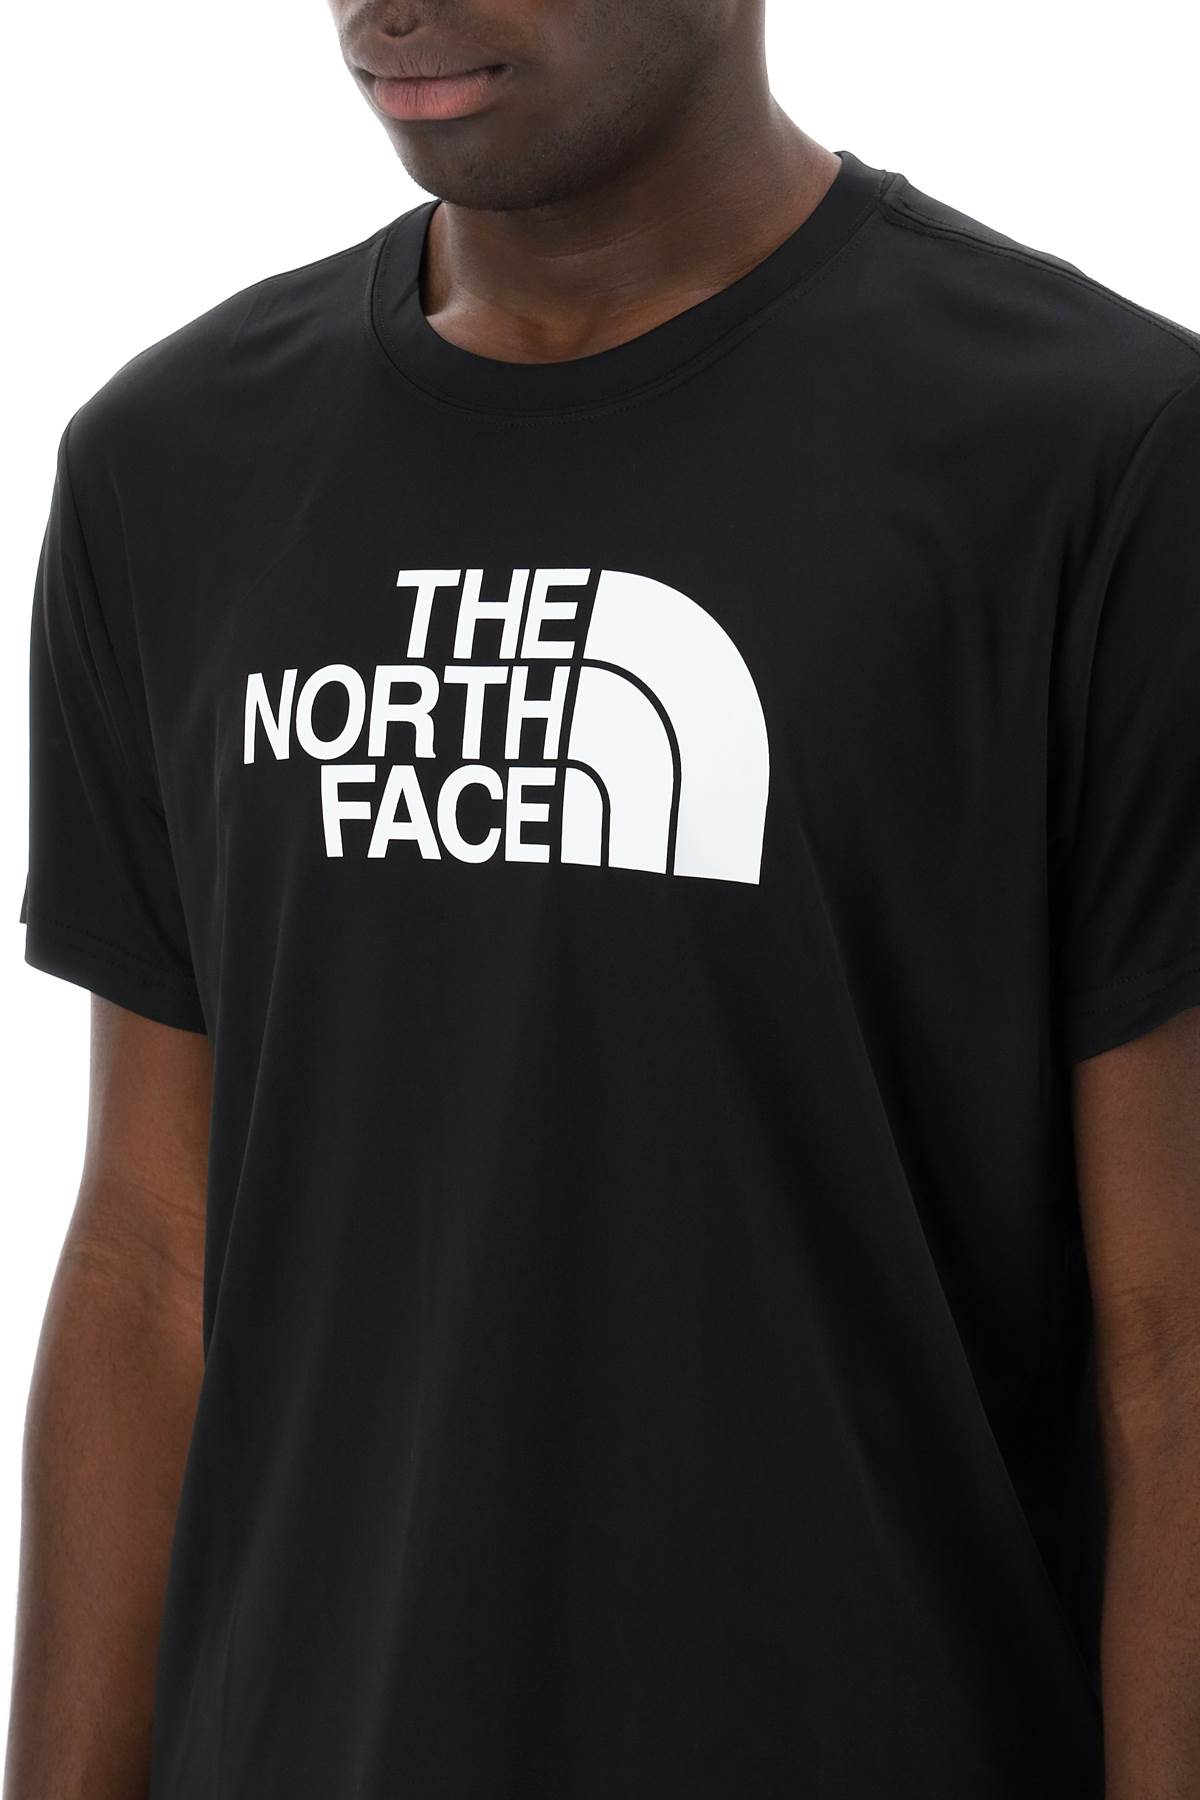 Shop The North Face Care  Easy Care Reax In Black